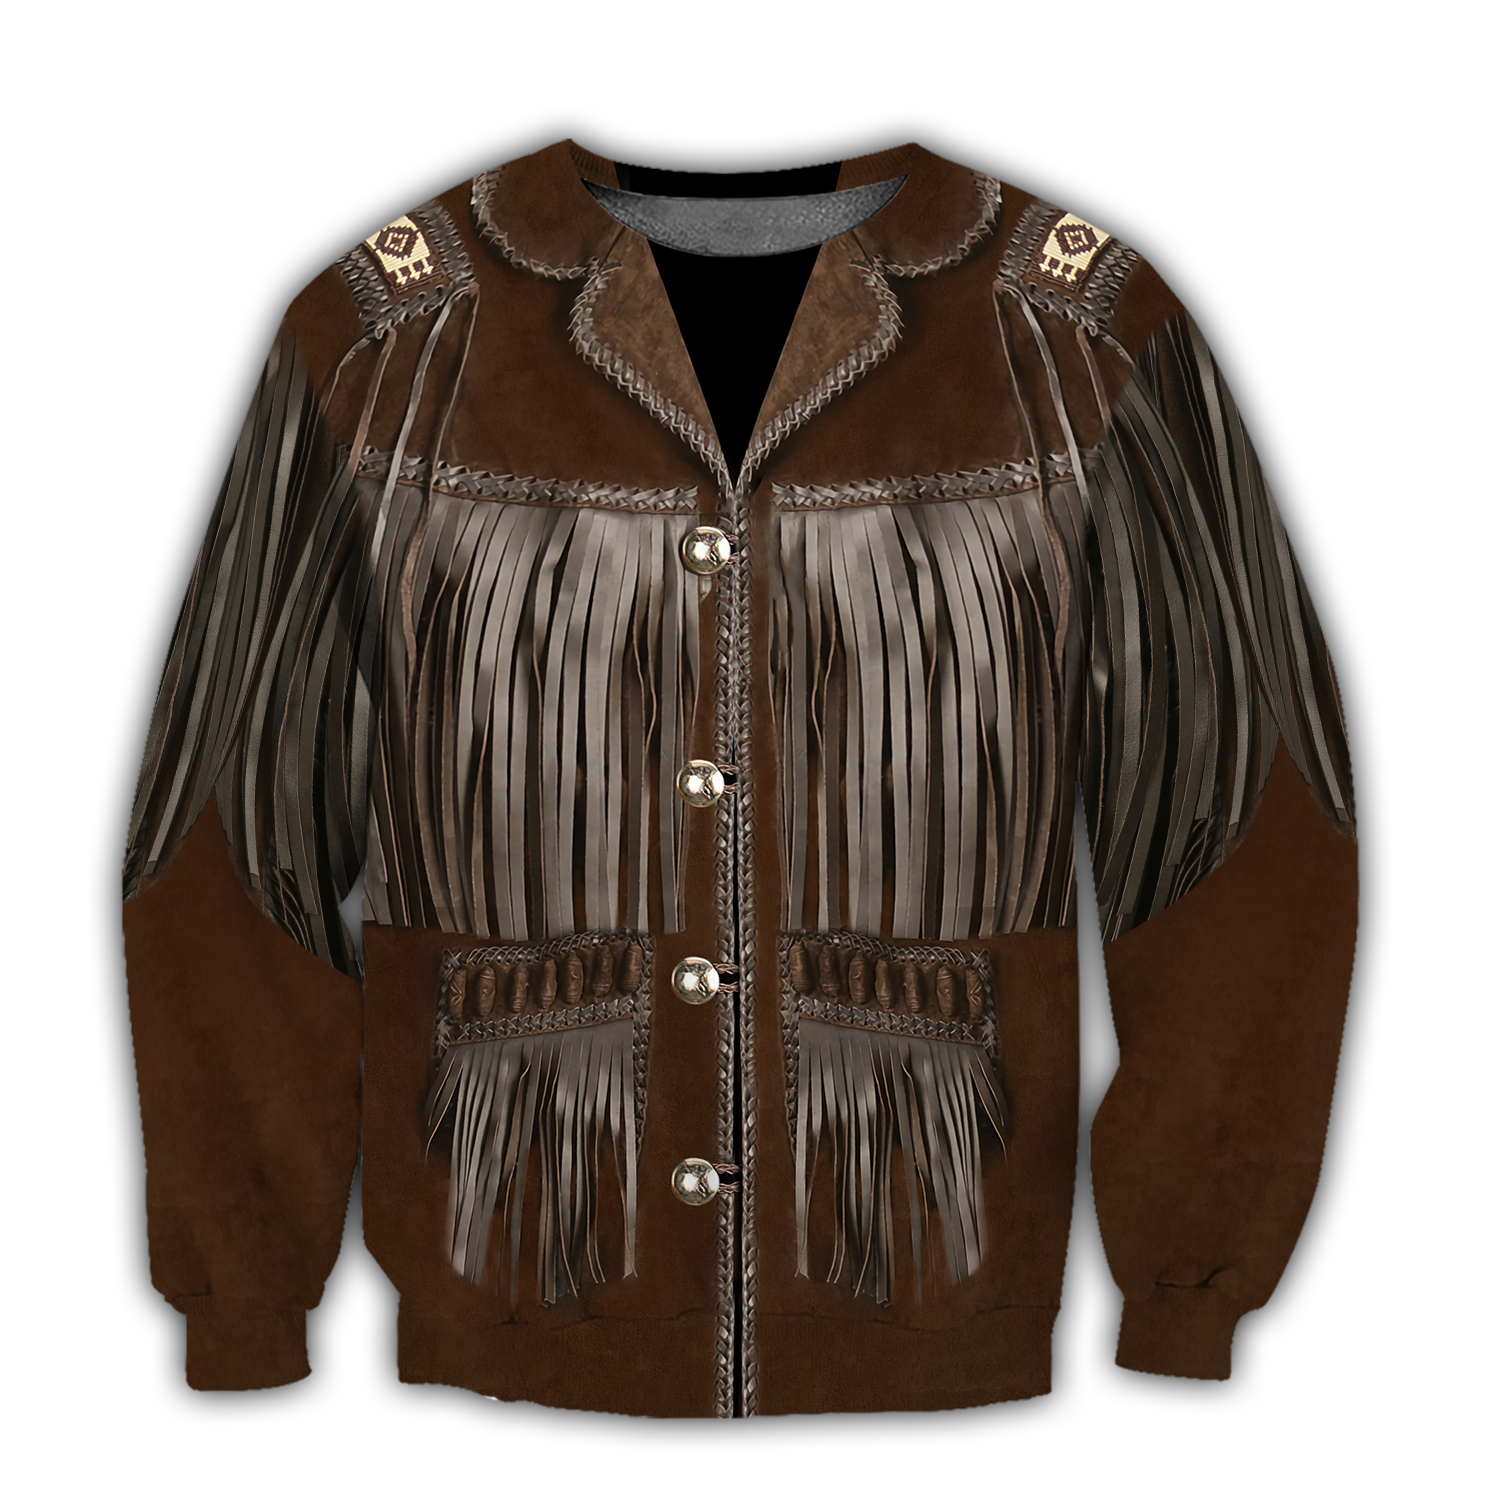 native-american-cowboy-jacket-no25-cosplay-3d-over-printed-unisex-deluxe-sweatshirt